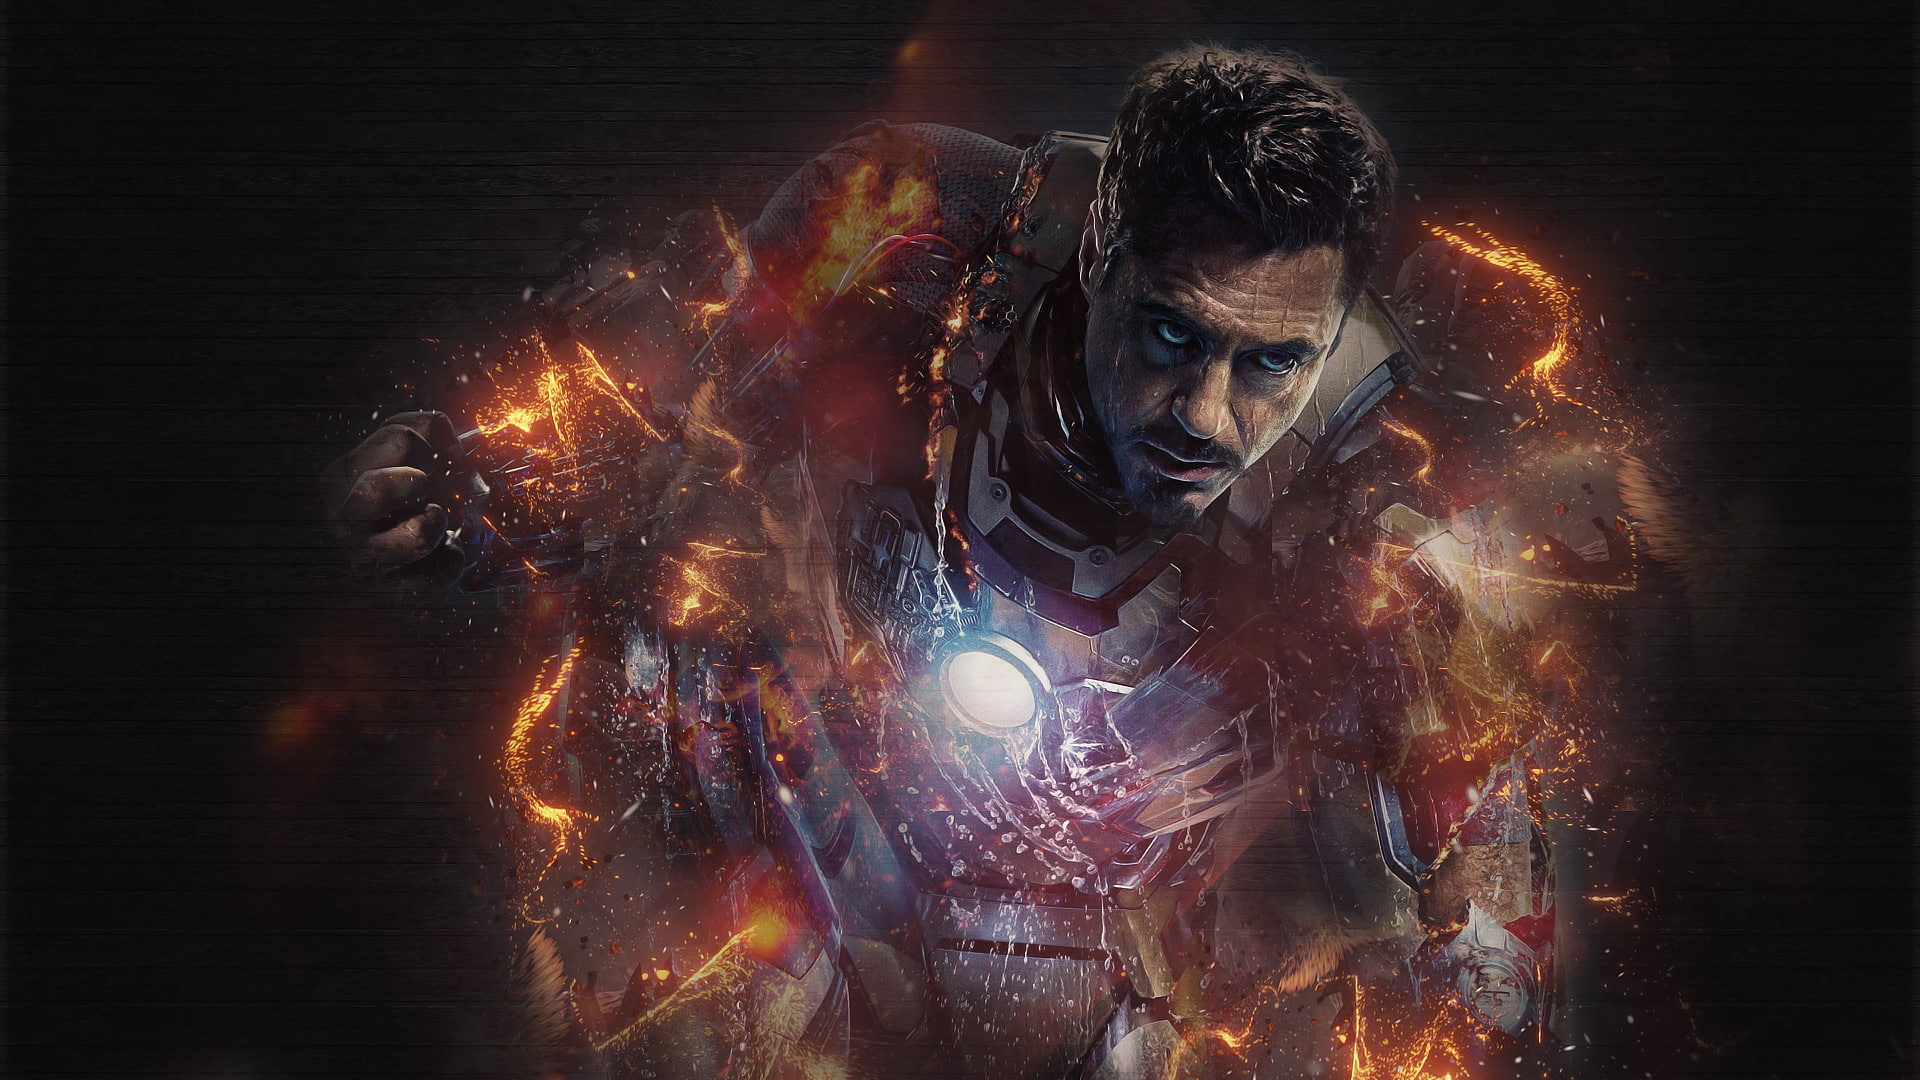 Iron Man, Tony Stark, Robert Downey Jr.